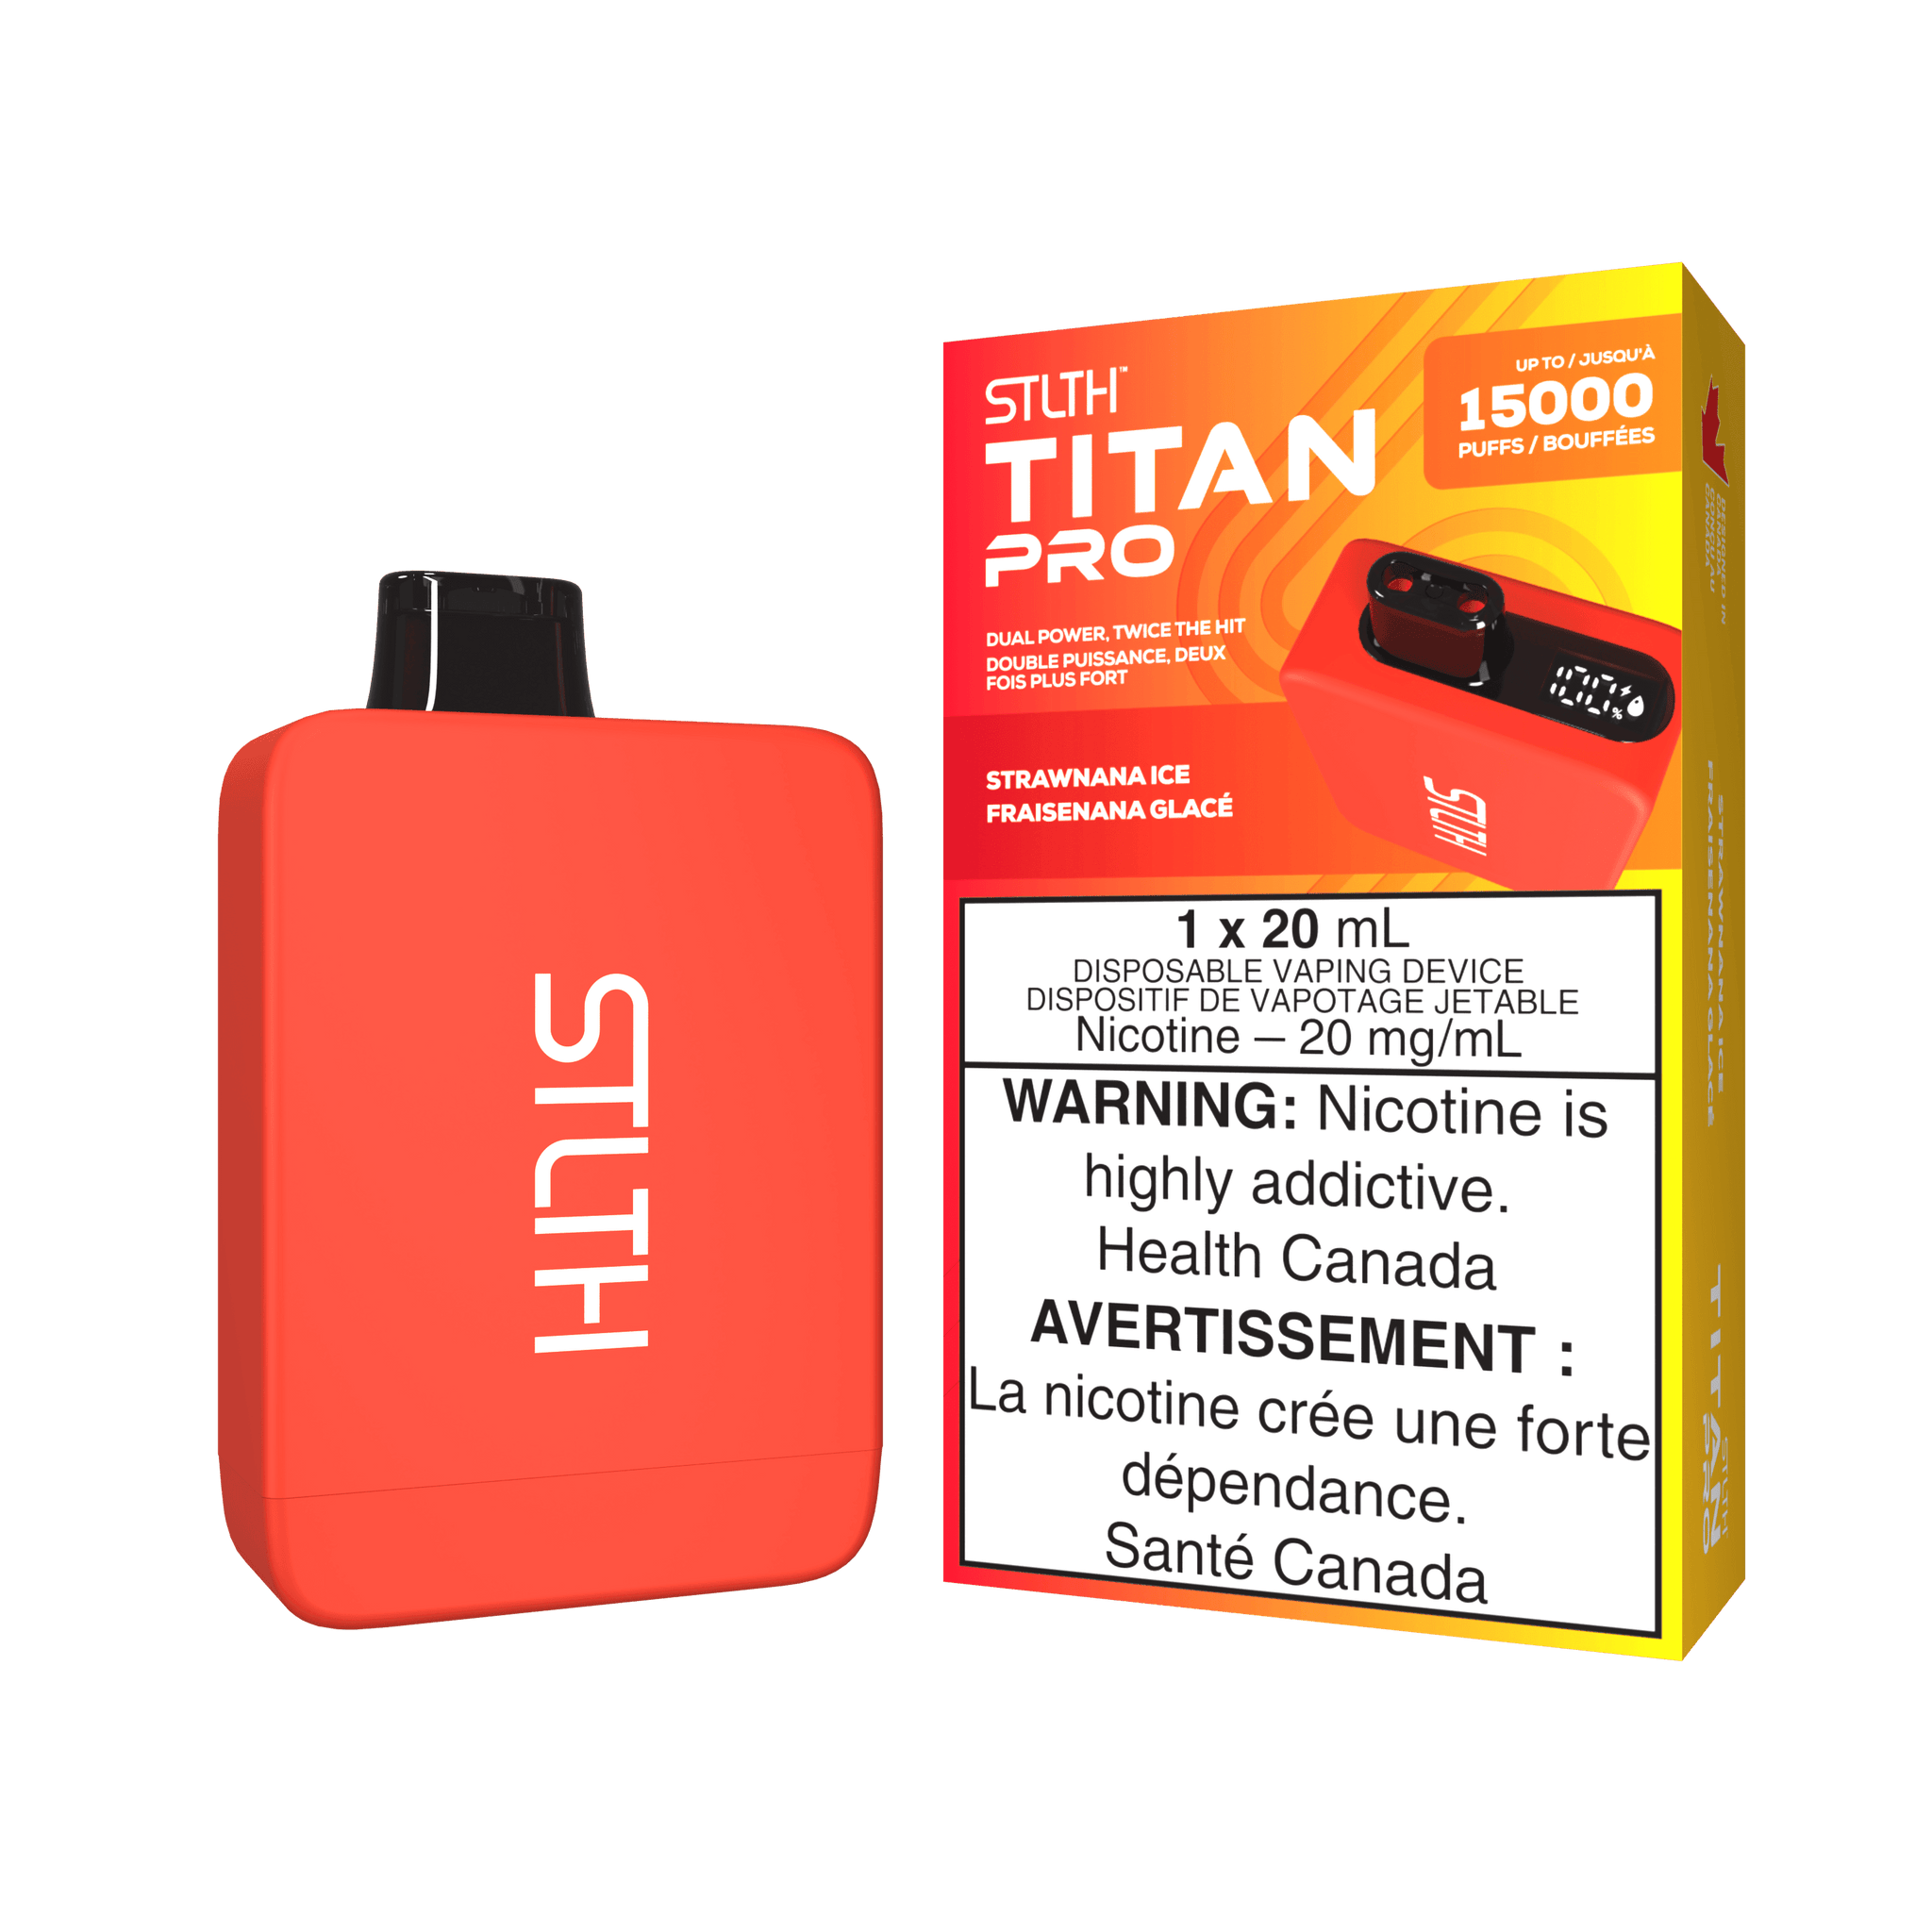 STLTH Titan Pro - Strawnana Ice - Vapor Shoppe